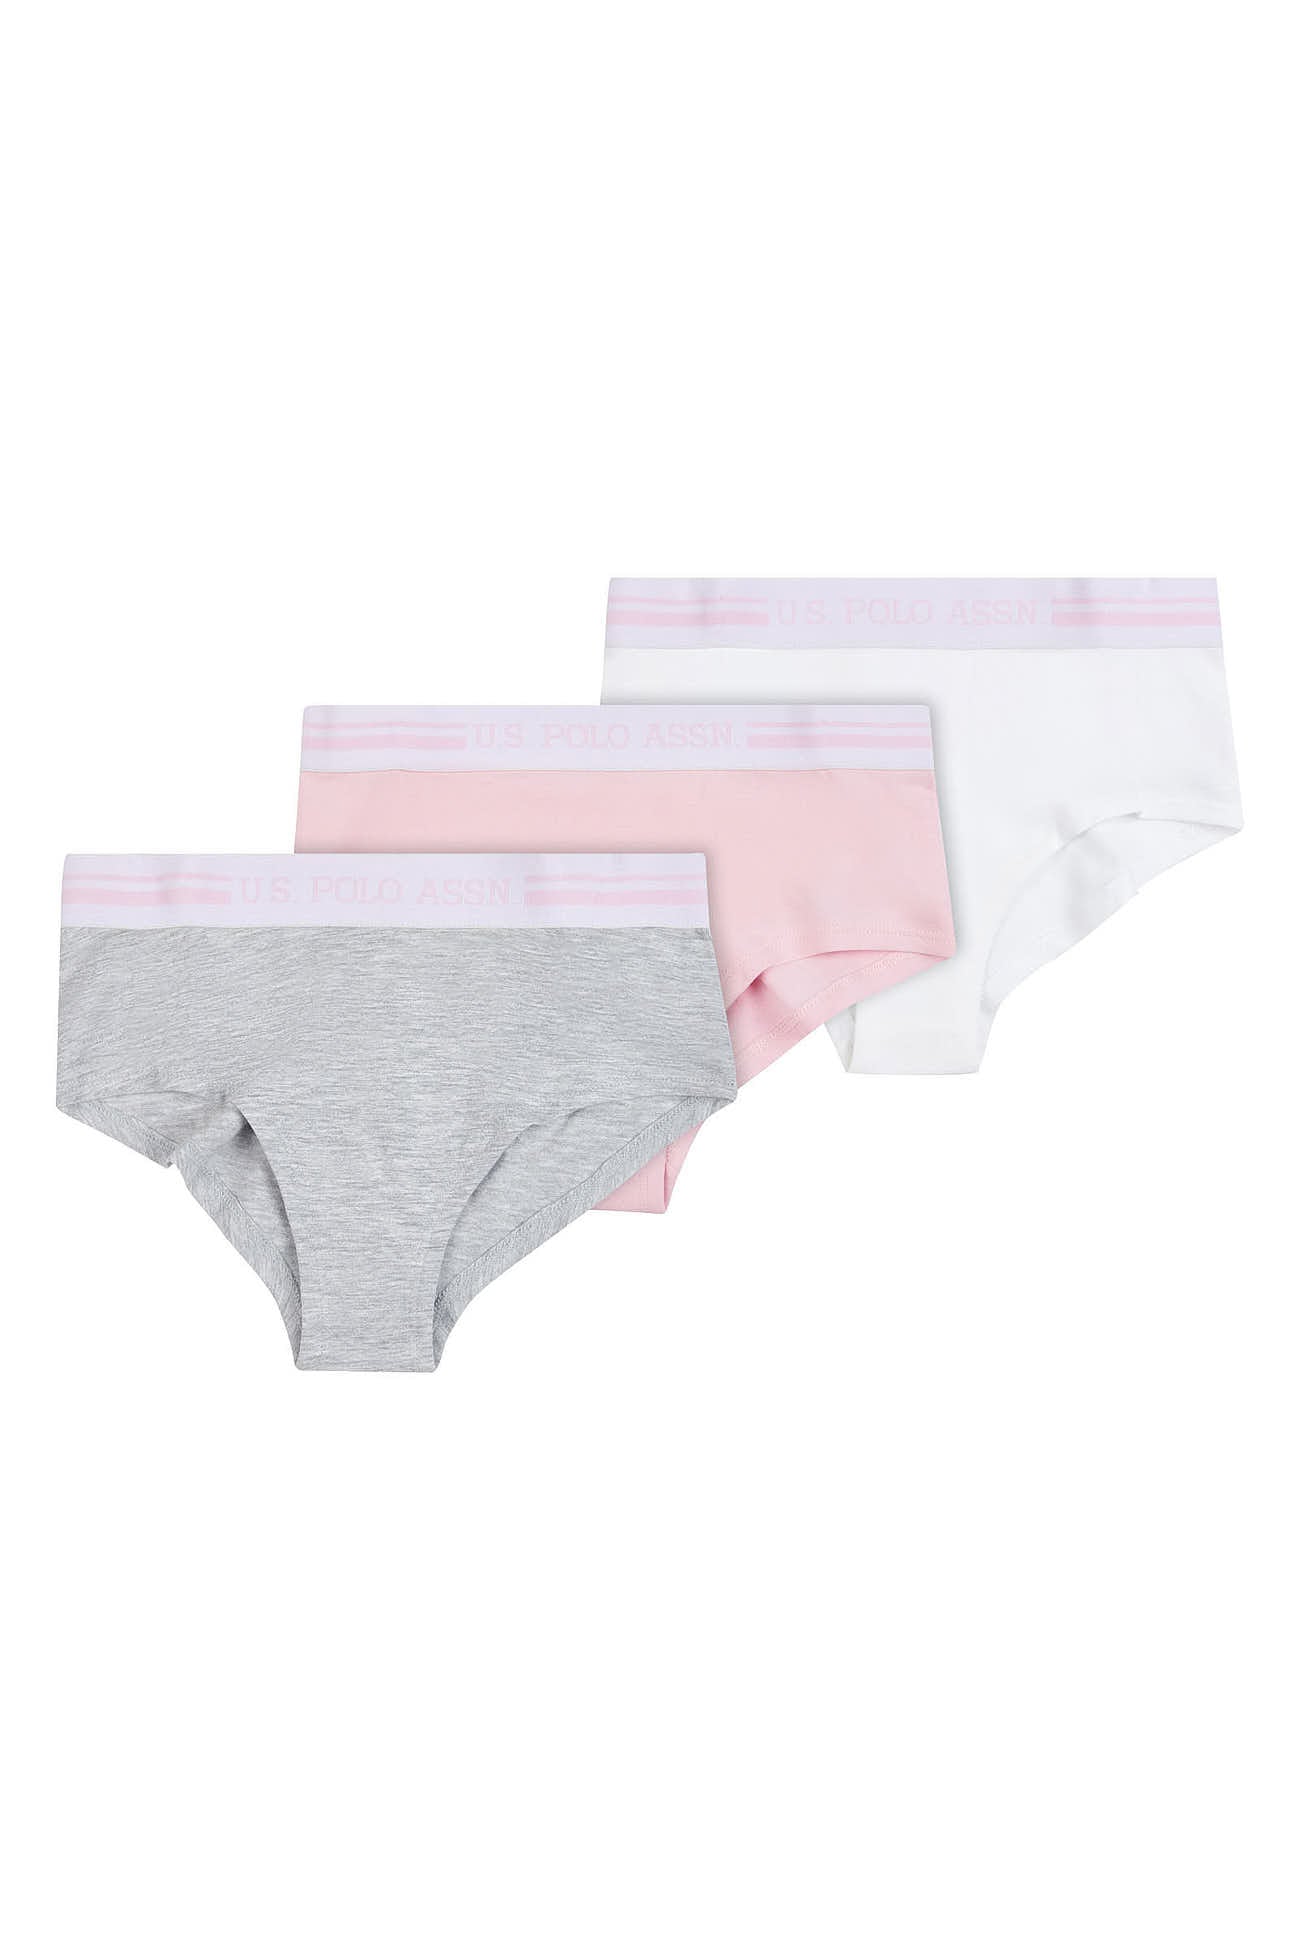 U.S. Polo Assn. Girls 3 Pack Hipster Brief Underwear in Pink